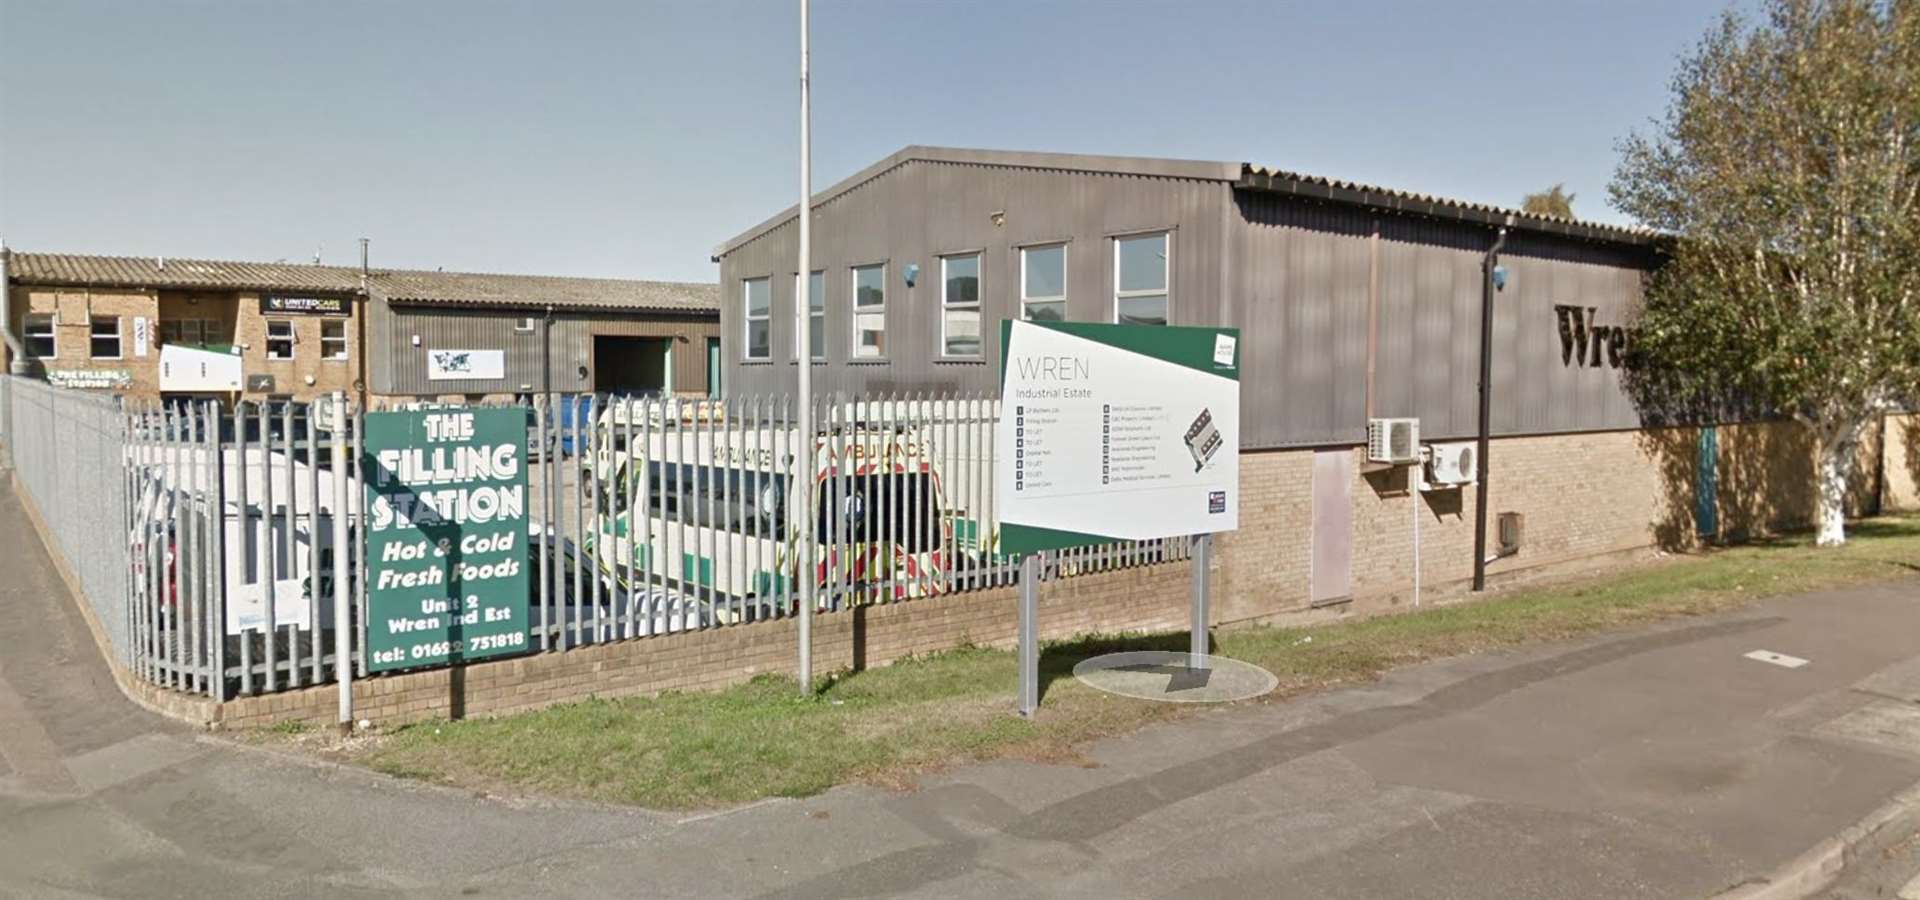 Maidstone Borough Council has spent £1.9m on Wren Industrial Estate. Picture: Google Street View